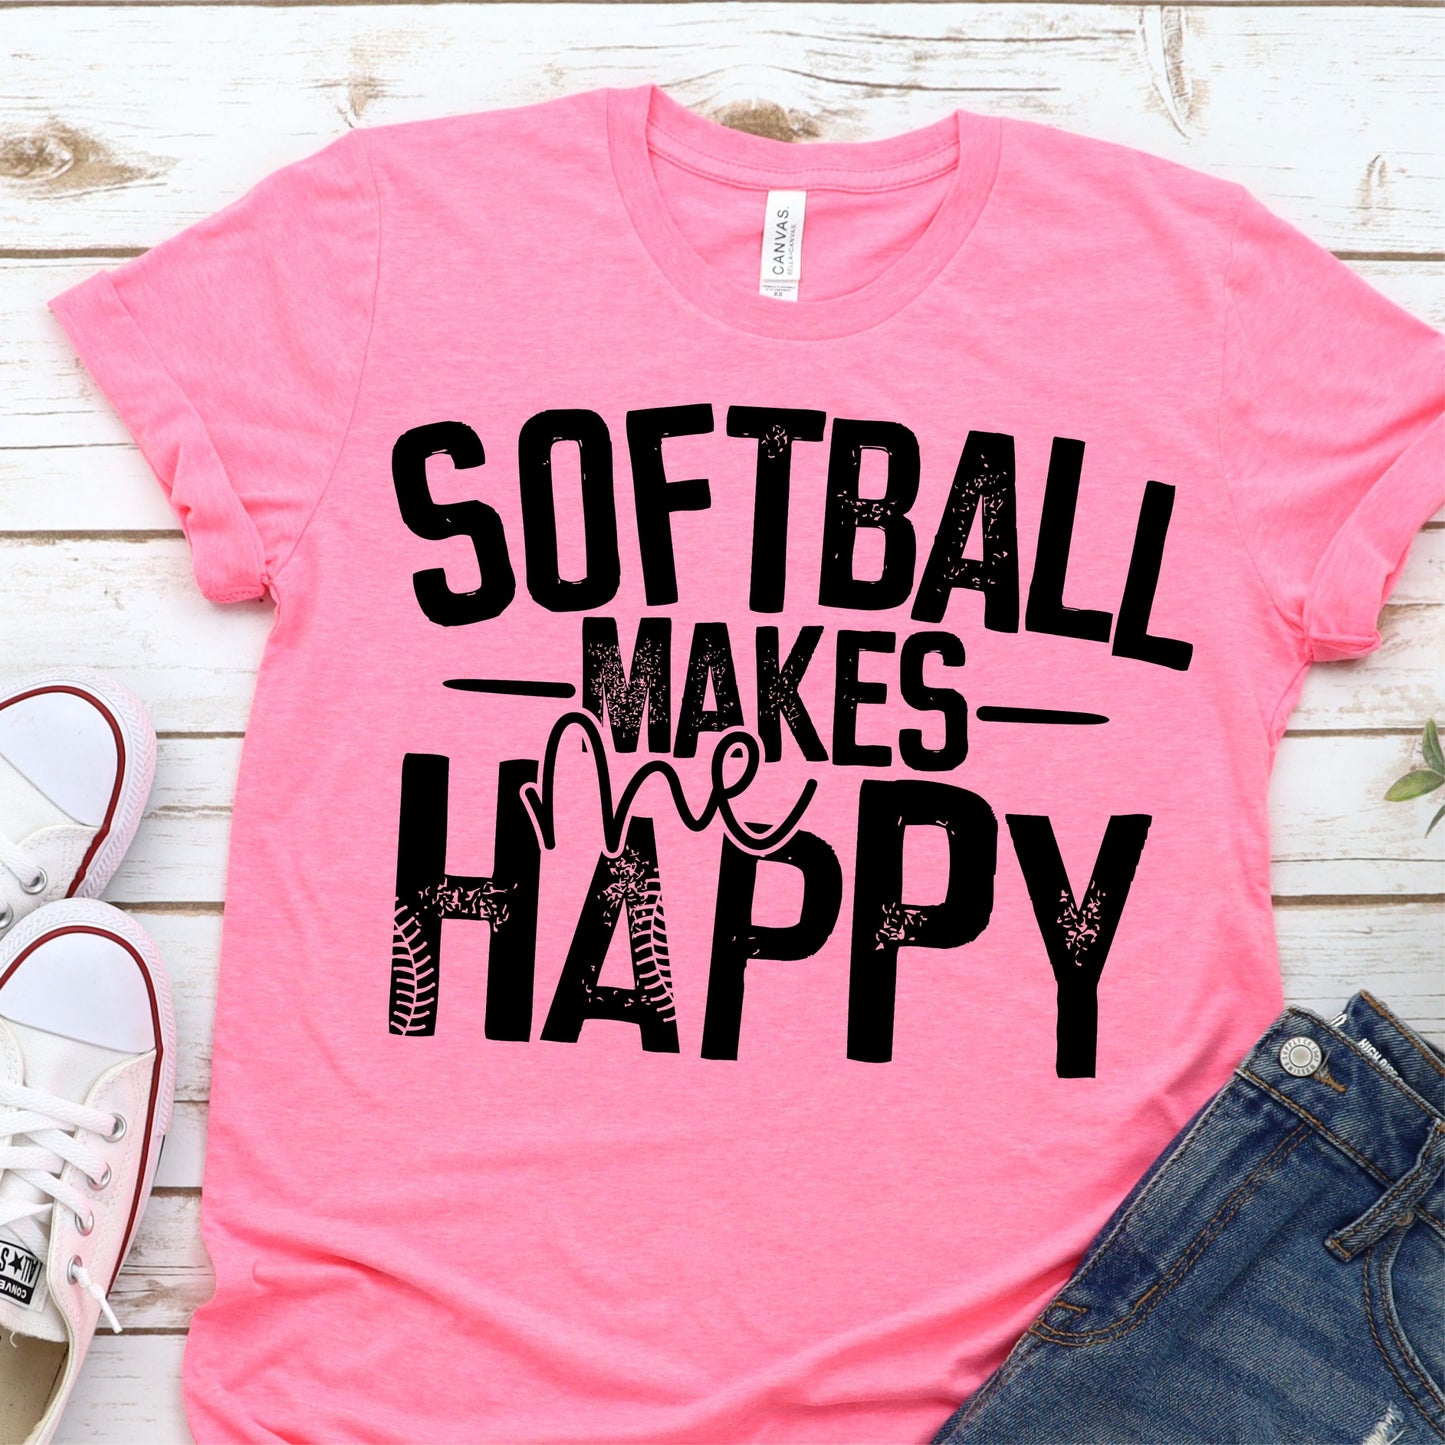 Baseball / Softball Makes Me Happy Shirt